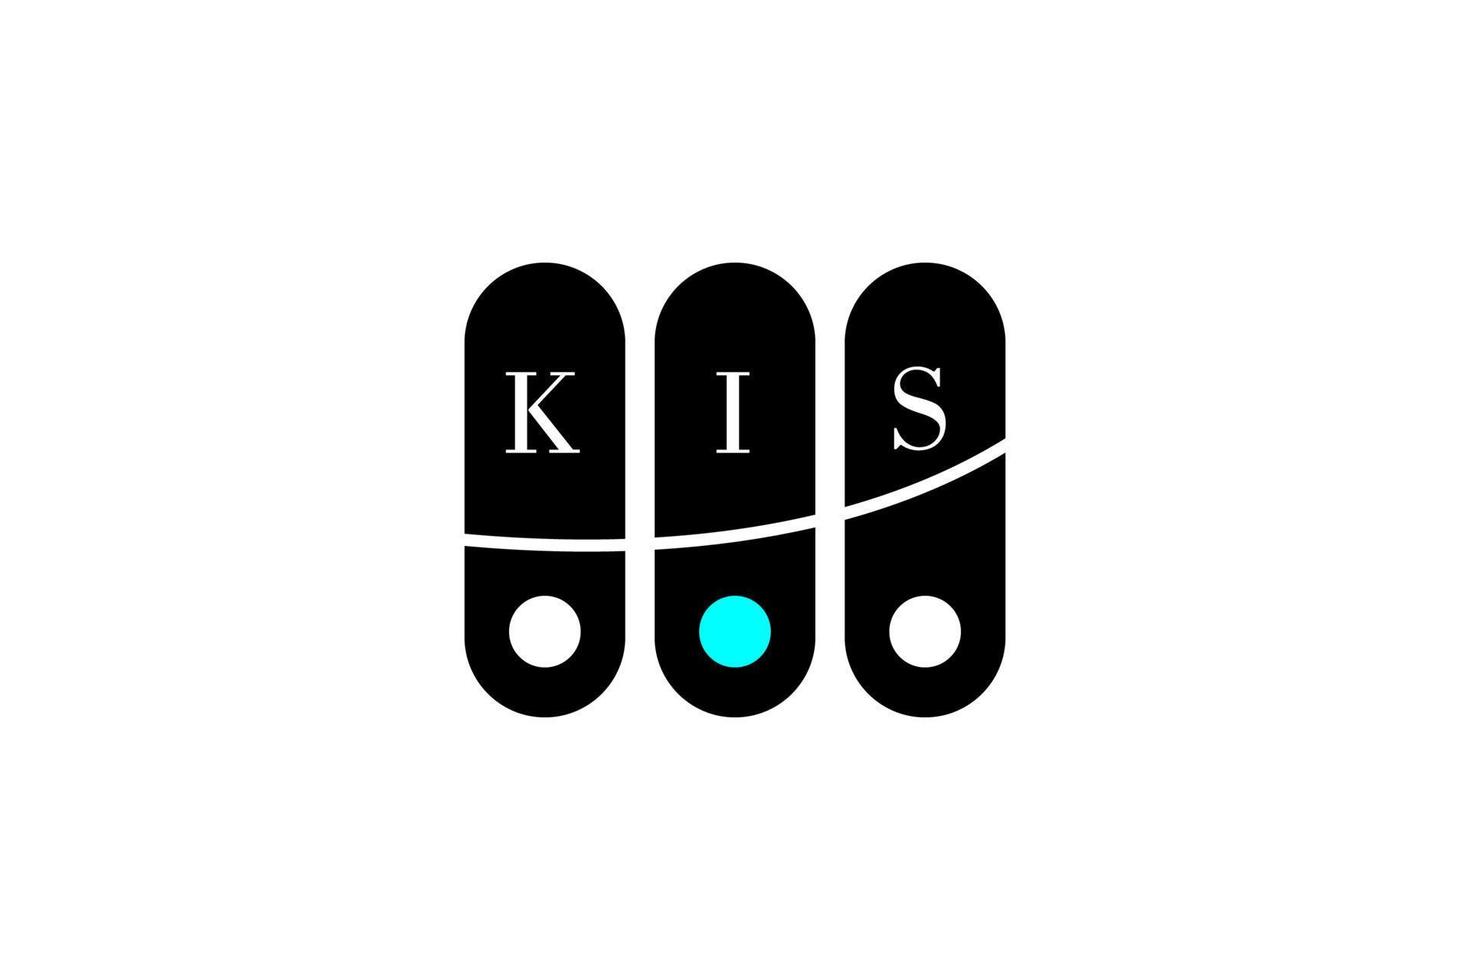 kis lettera e alfabeto logo design vettore